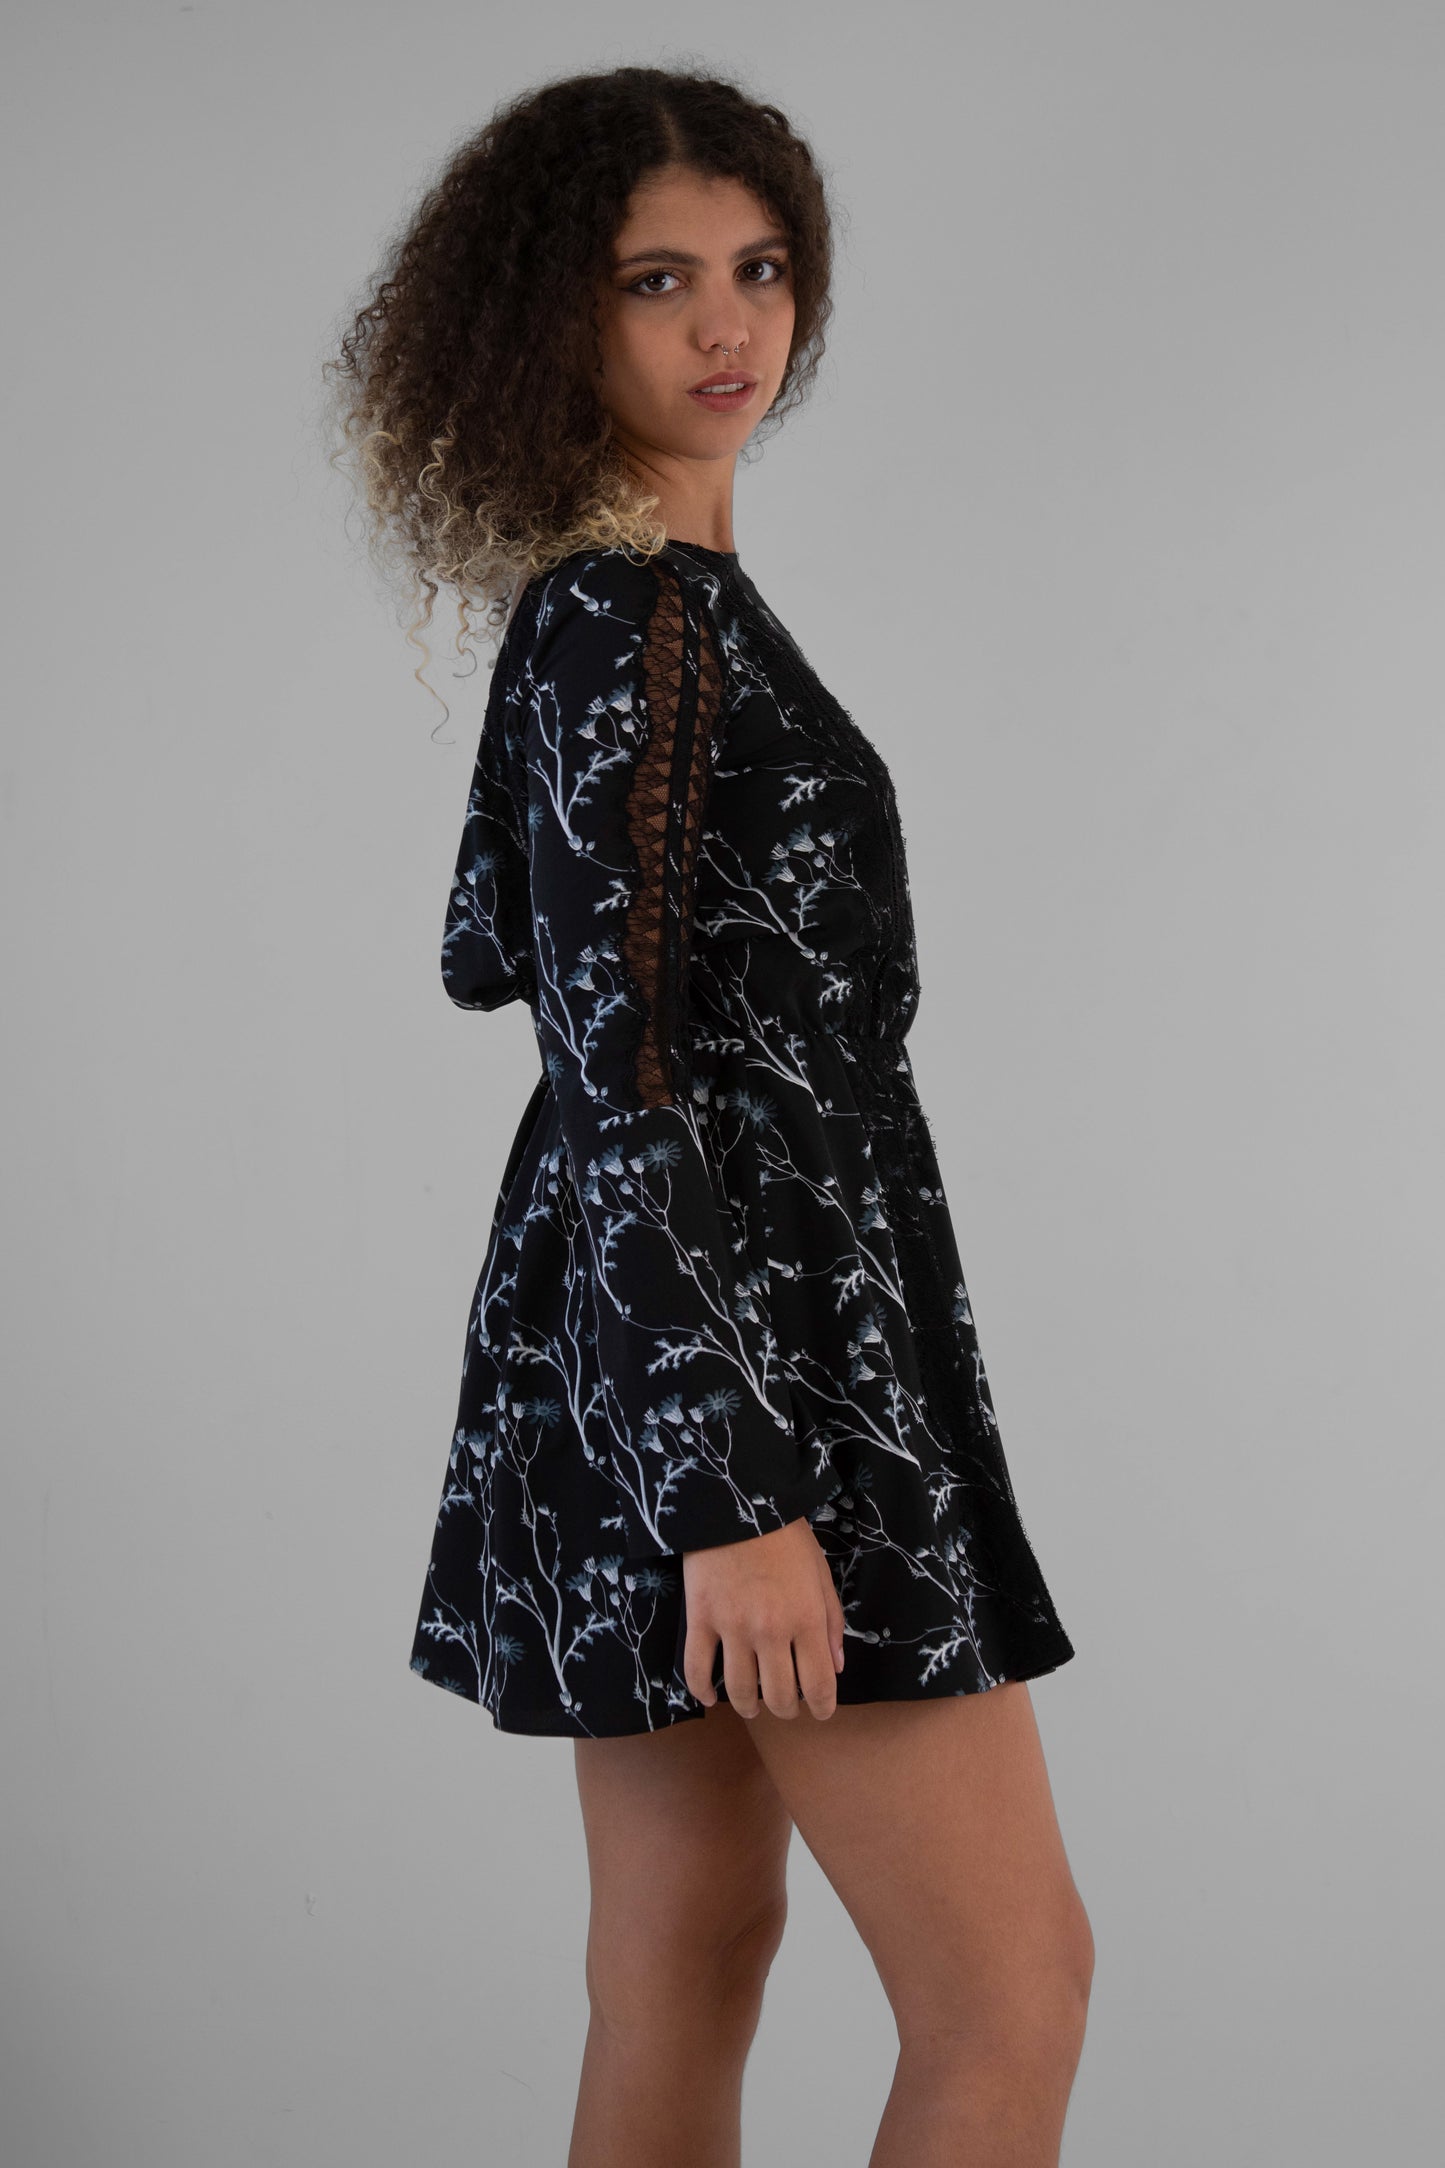 Thakoon Addition "Fall RTW" Mini Dress in Dark Floral (Black, Blue, White) - XS